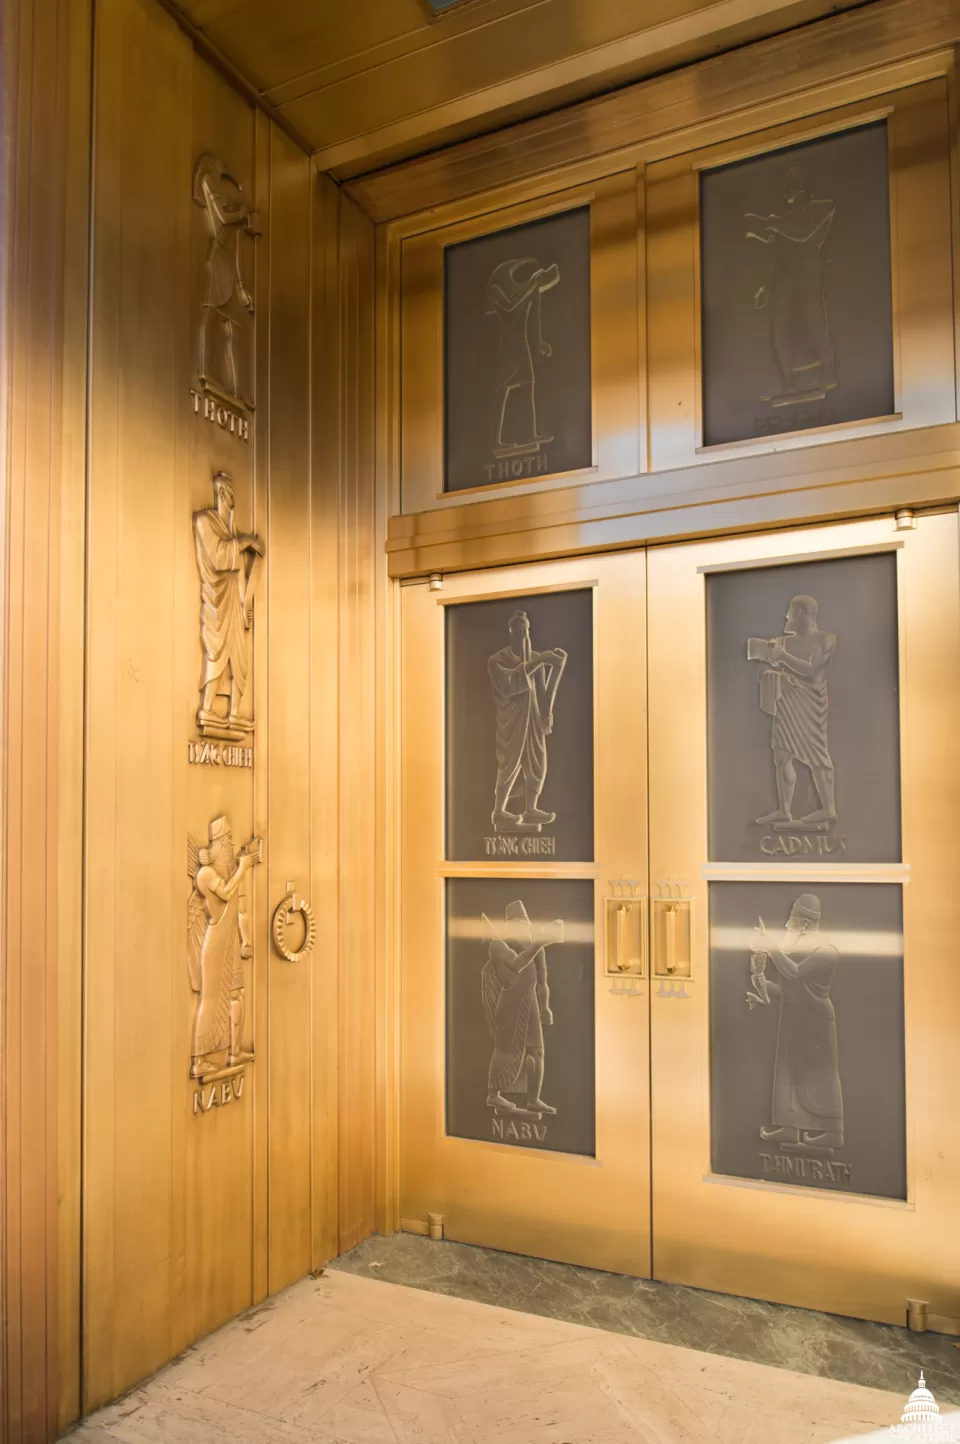 The bronze and glass doors of the John Adams Building.